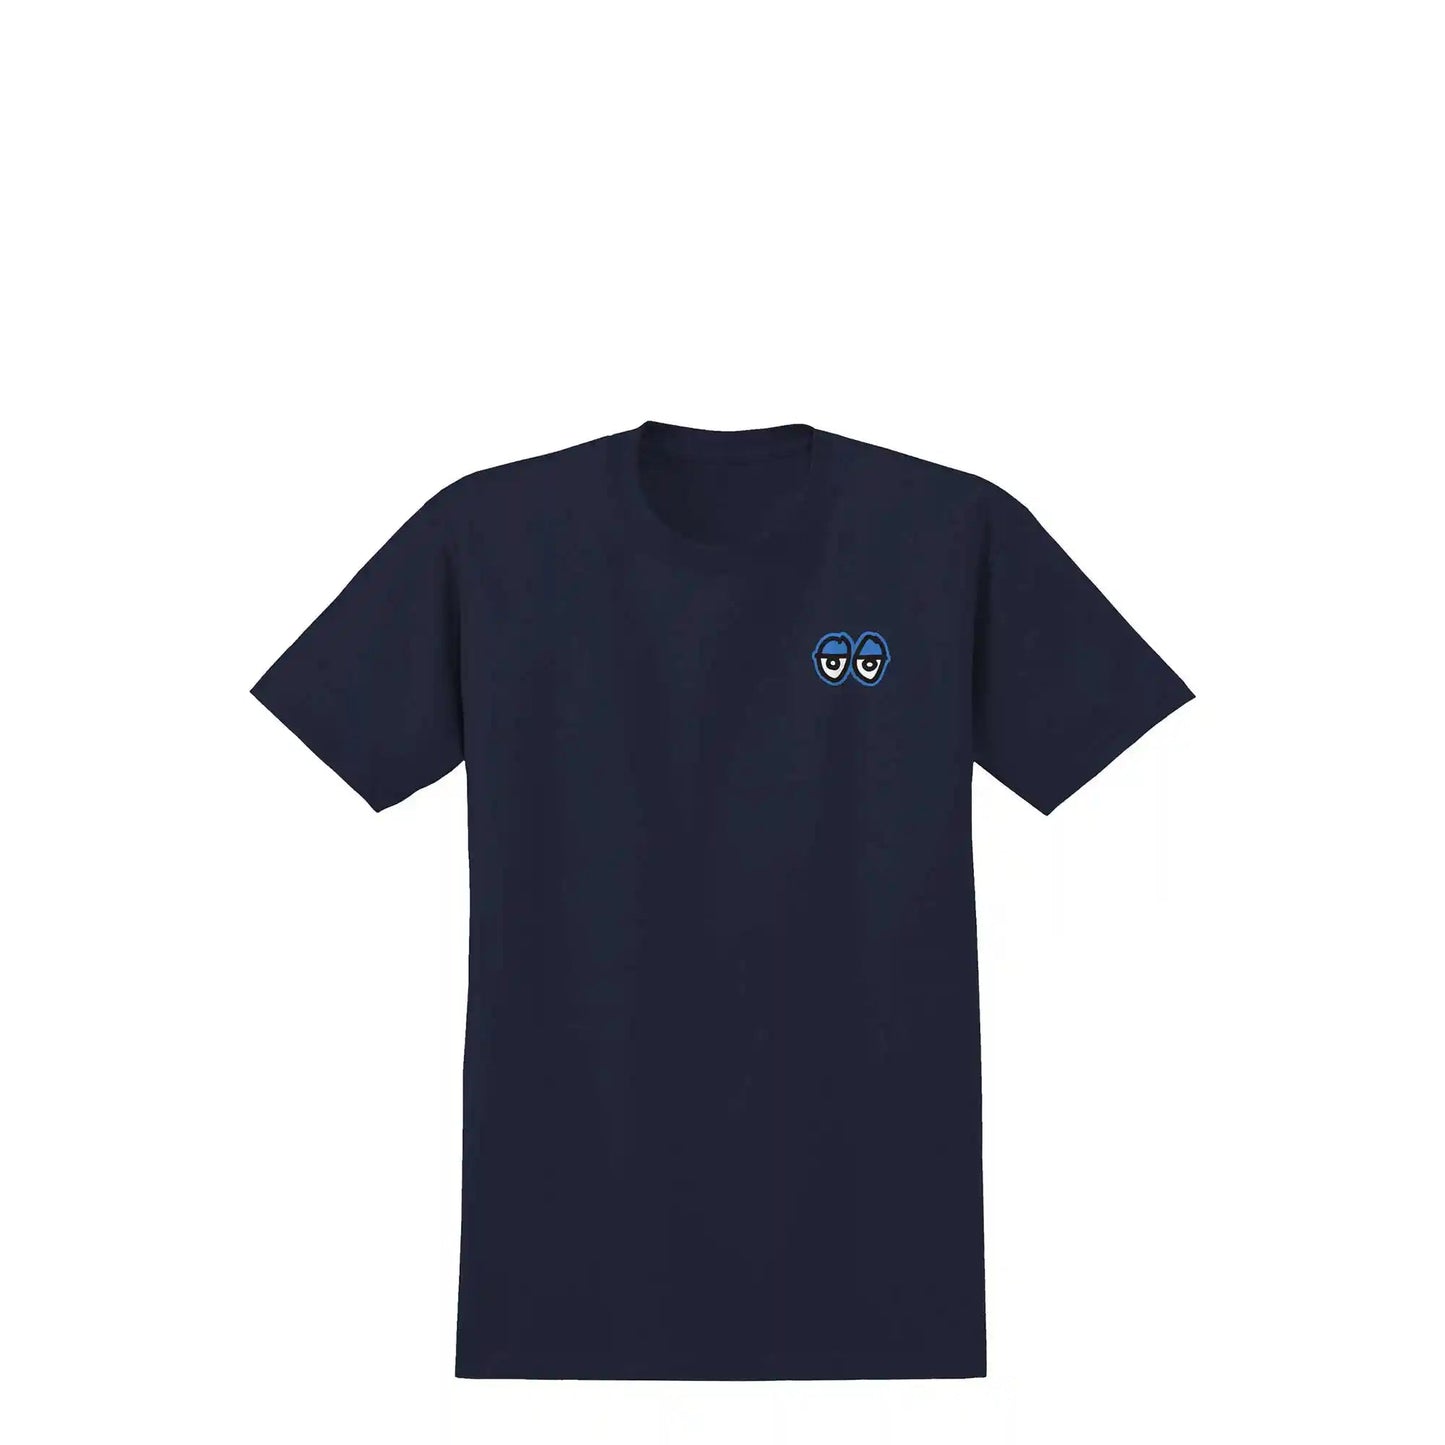 Krooked Strait Eyes T-Shirt, navy w/ blue prints - Tiki Room Skateboards - 2